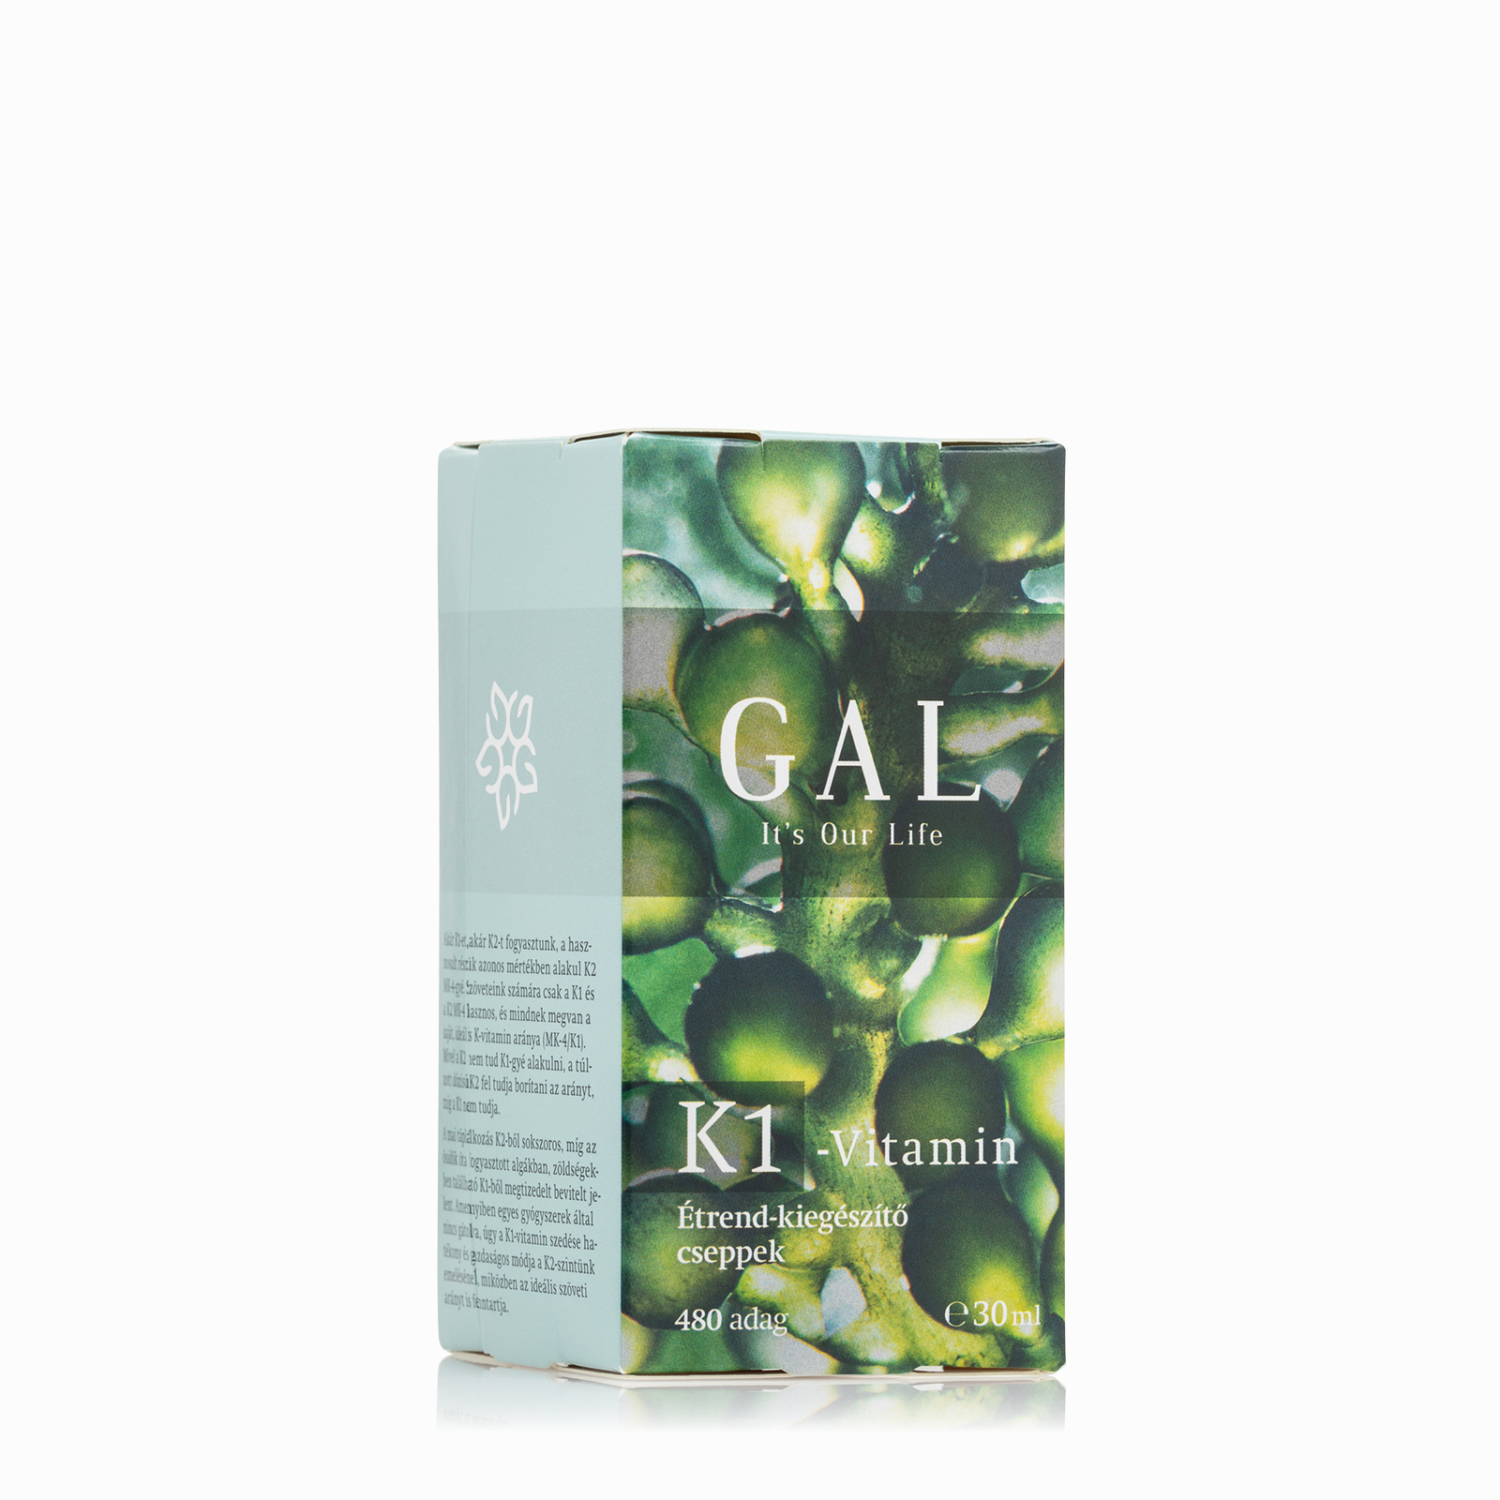 gal-k-1-vitamin-aloebeauty